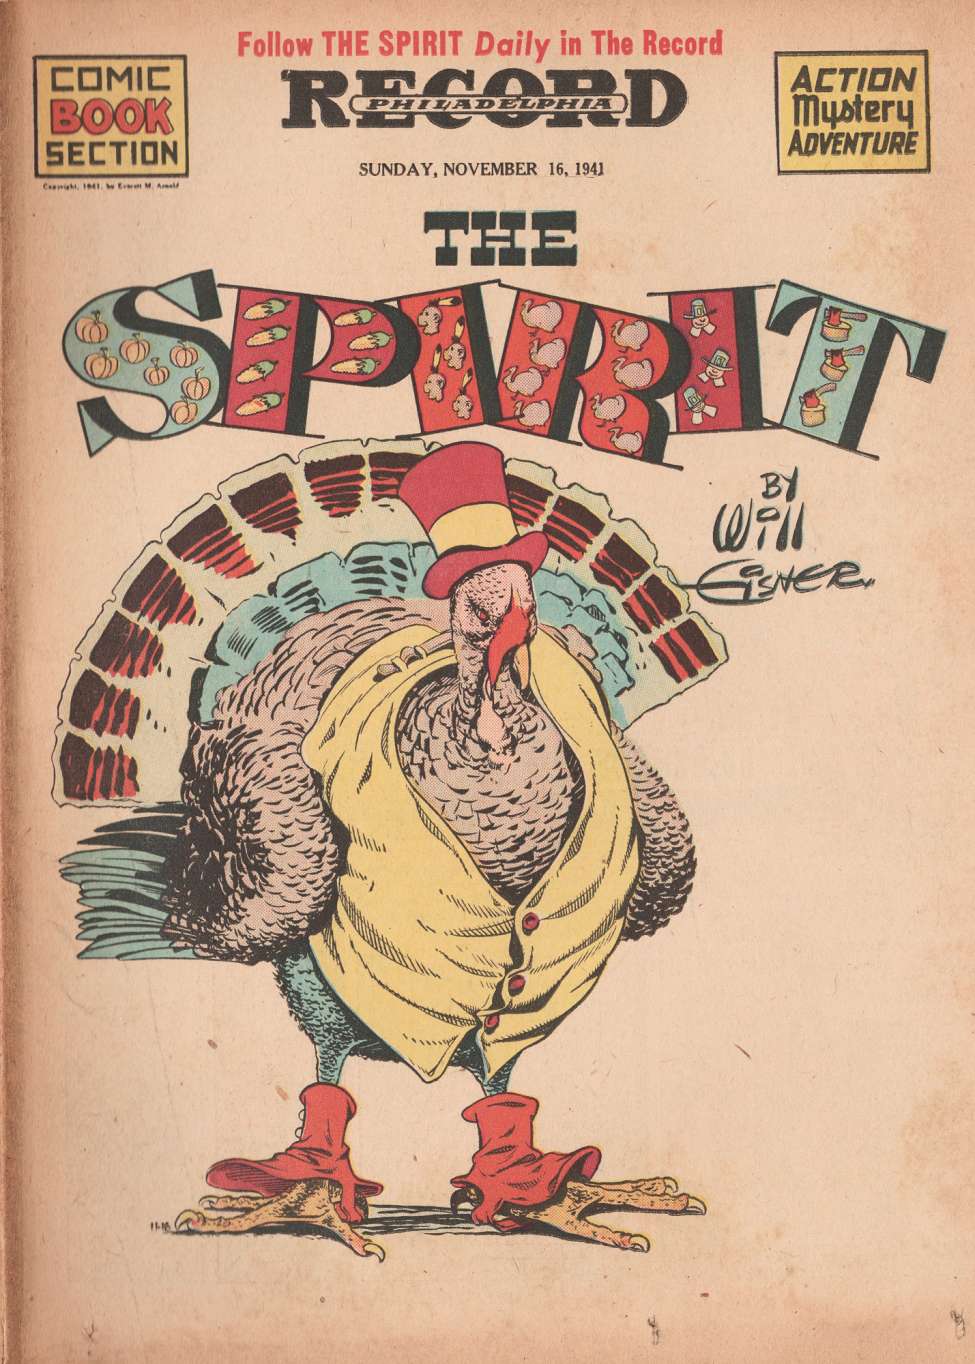 Comic Book Cover For The Spirit (1941-11-16) - Philadelphia Record